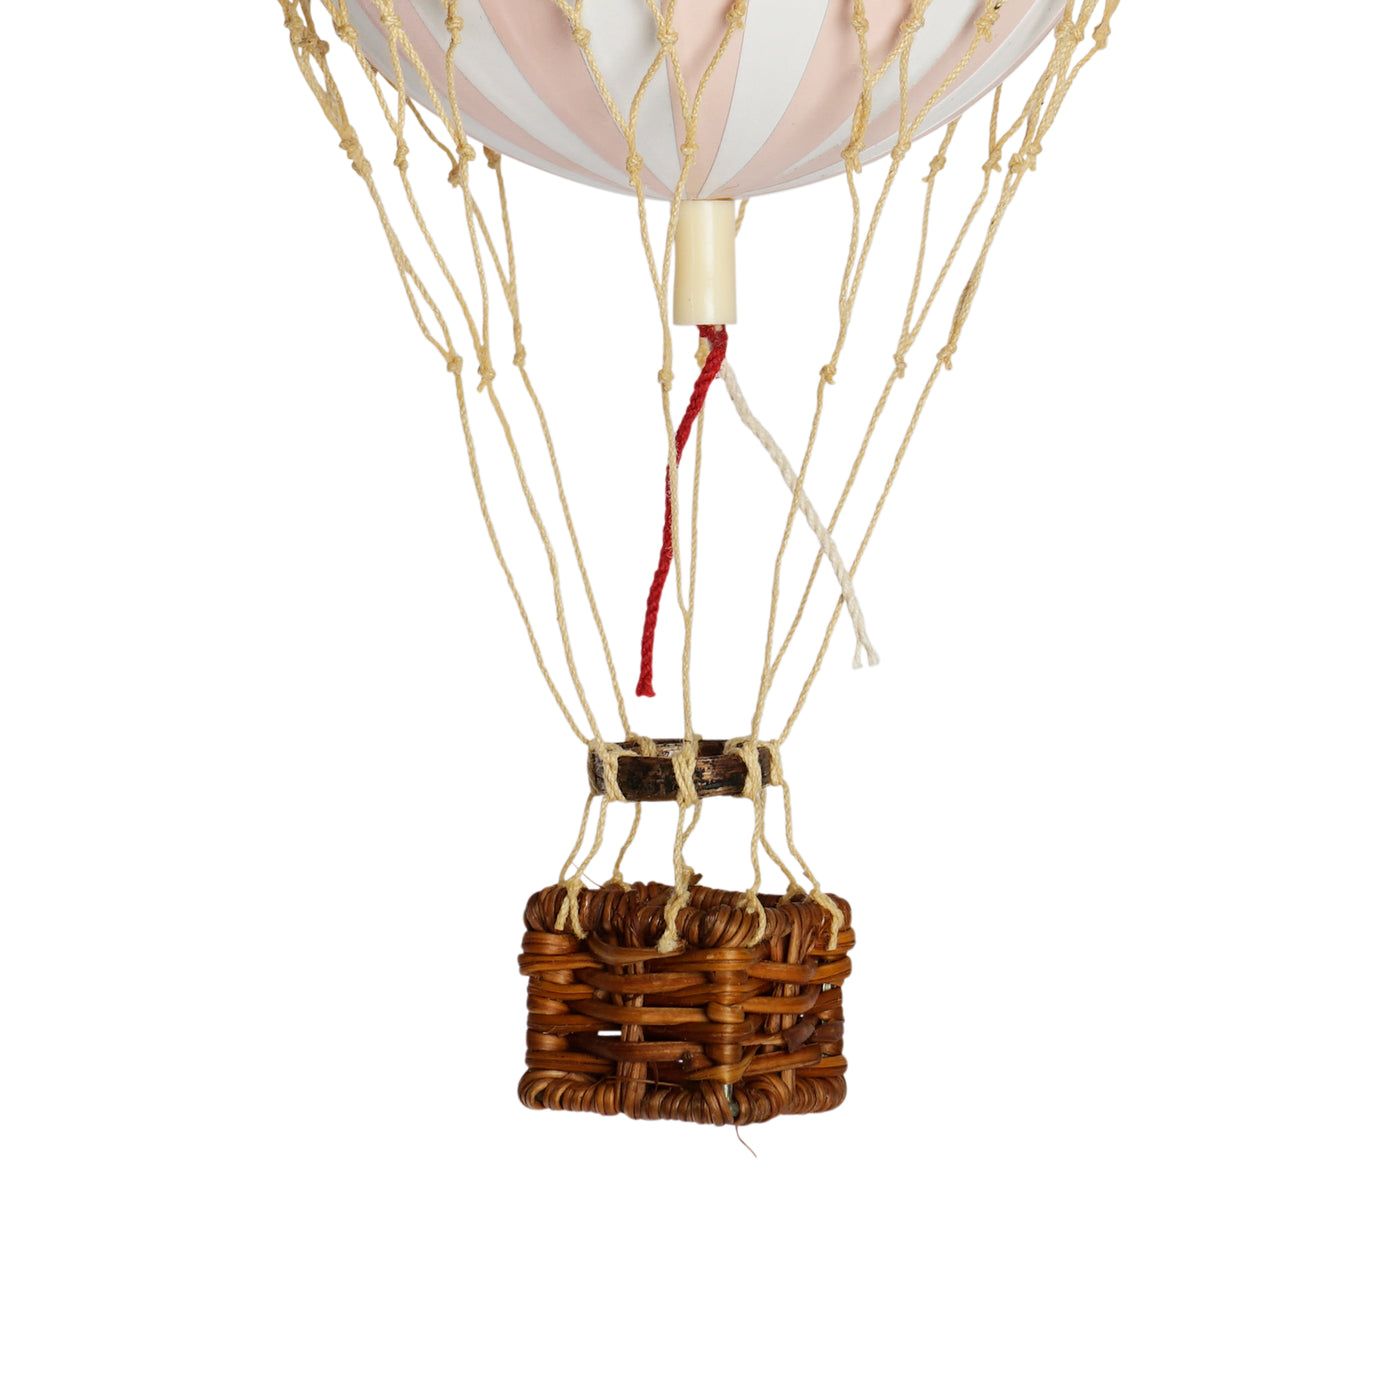 Luftballon, lyserød, 8,5 cm